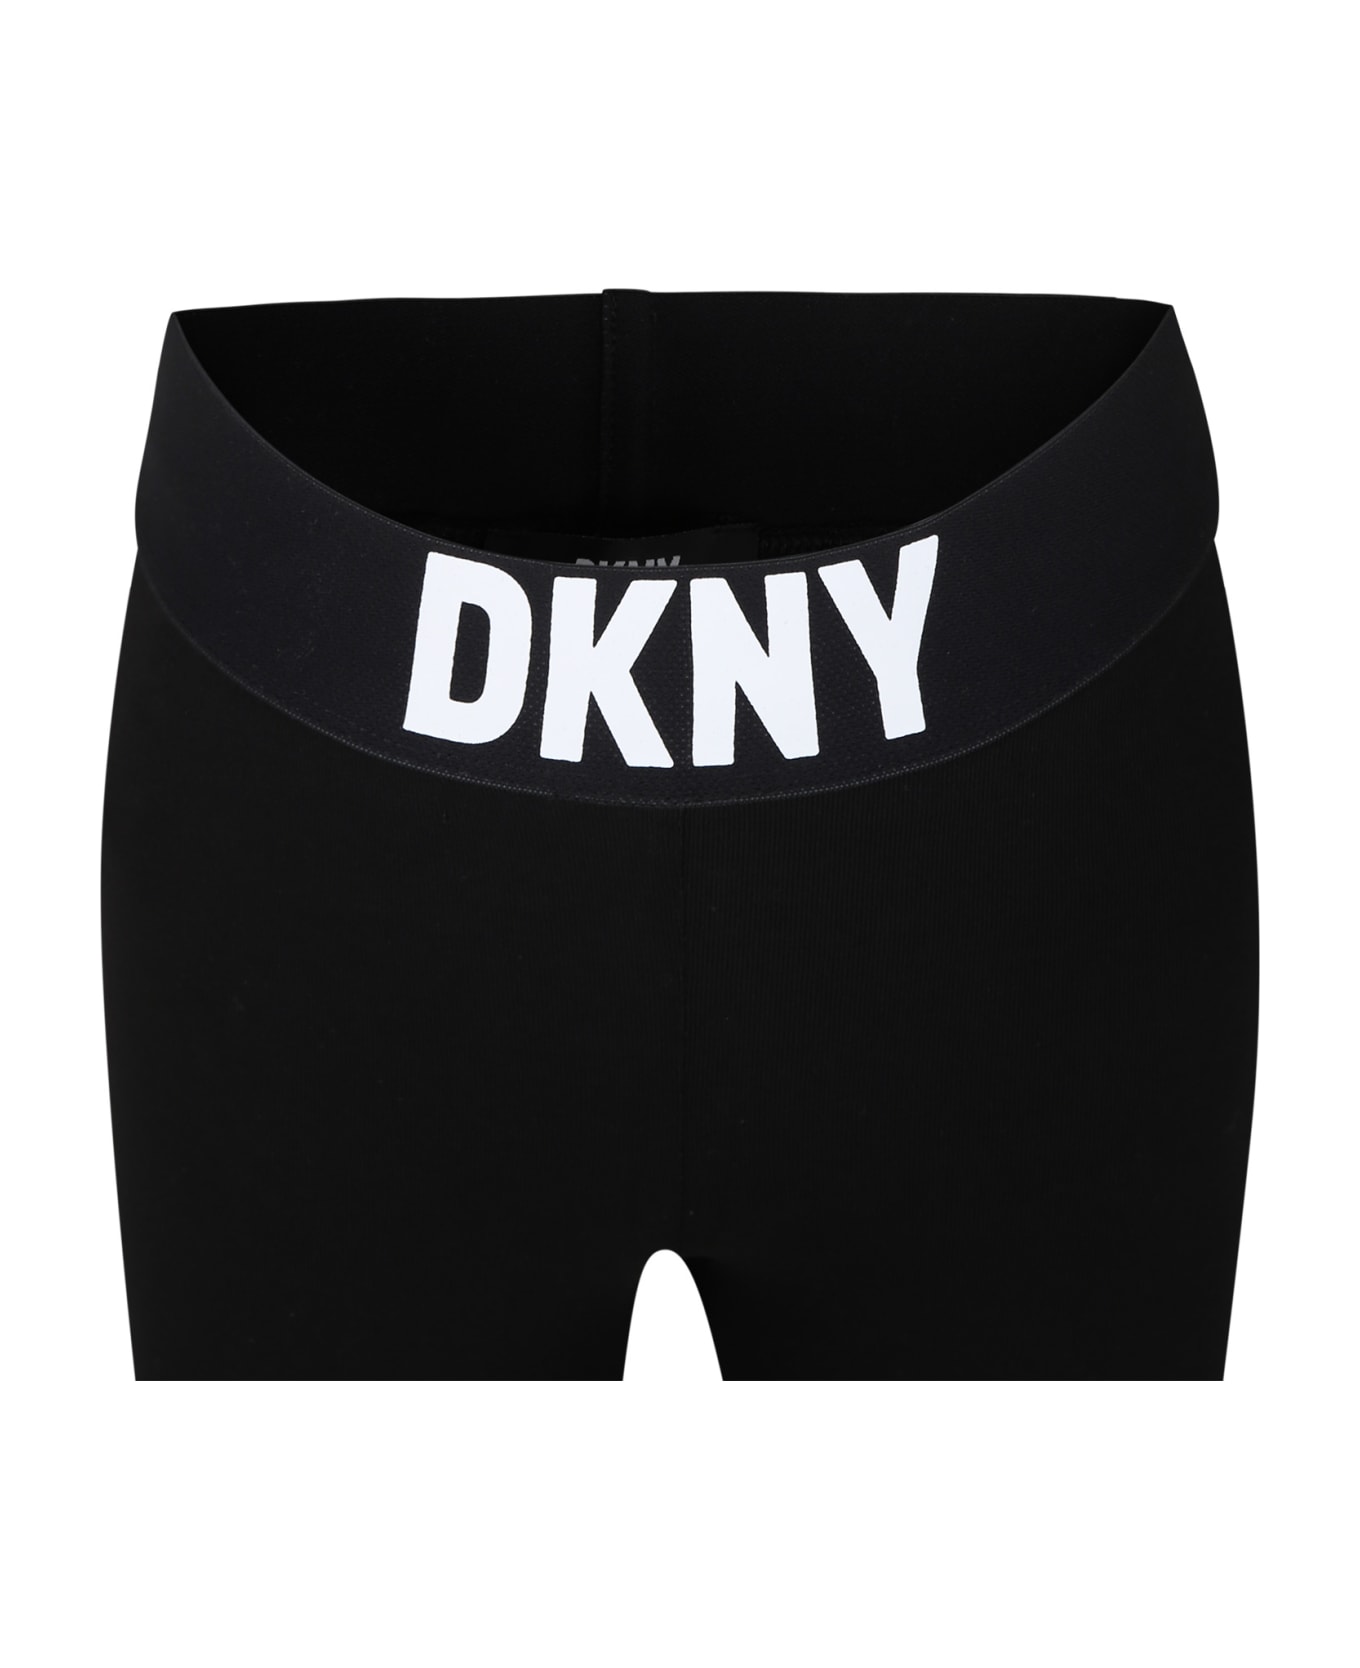 DKNY Black Leggings For Girl With Logo - B Nero ボトムス